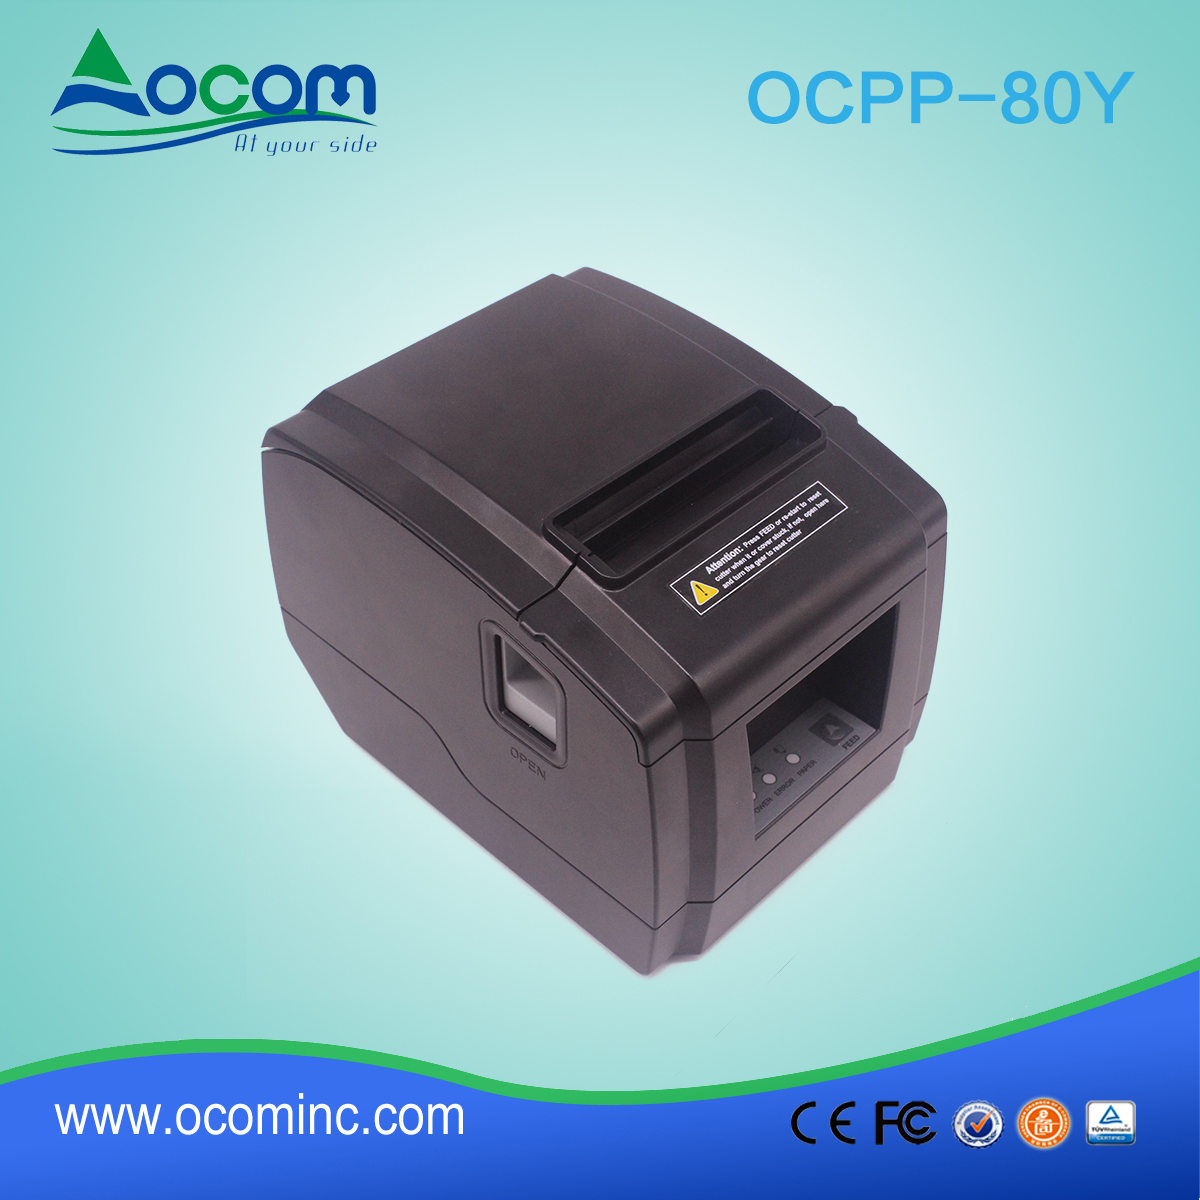 OCPP-80Y-Low cost 3" auto cutter POS receipt printer